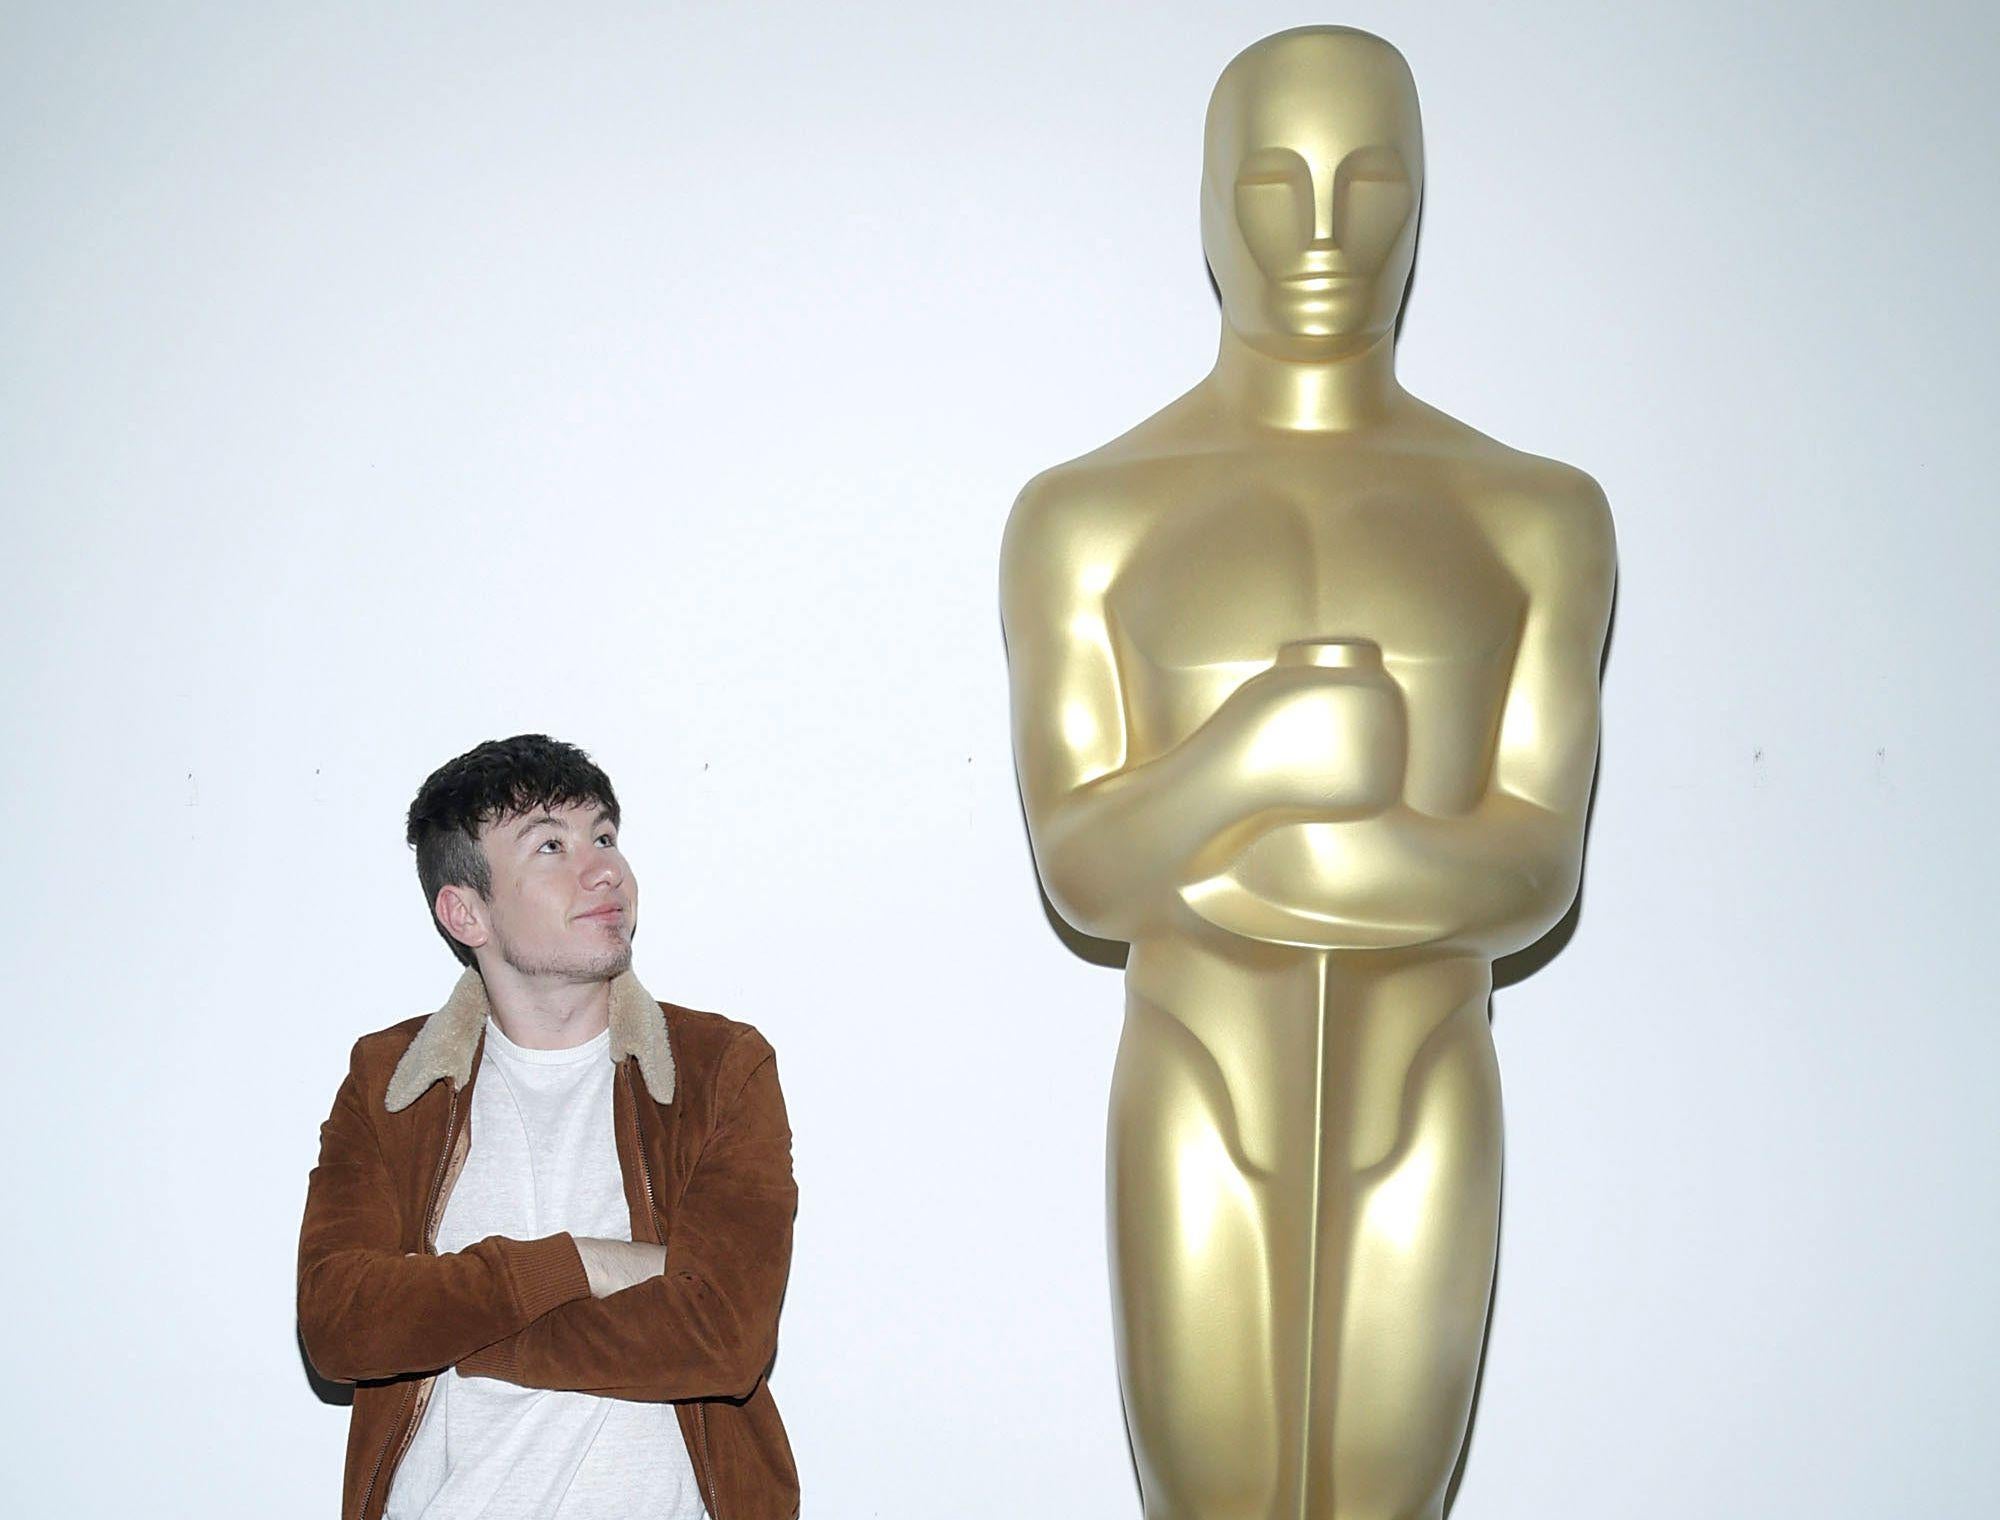 Barry Keoghan alongside a large Oscar statuette